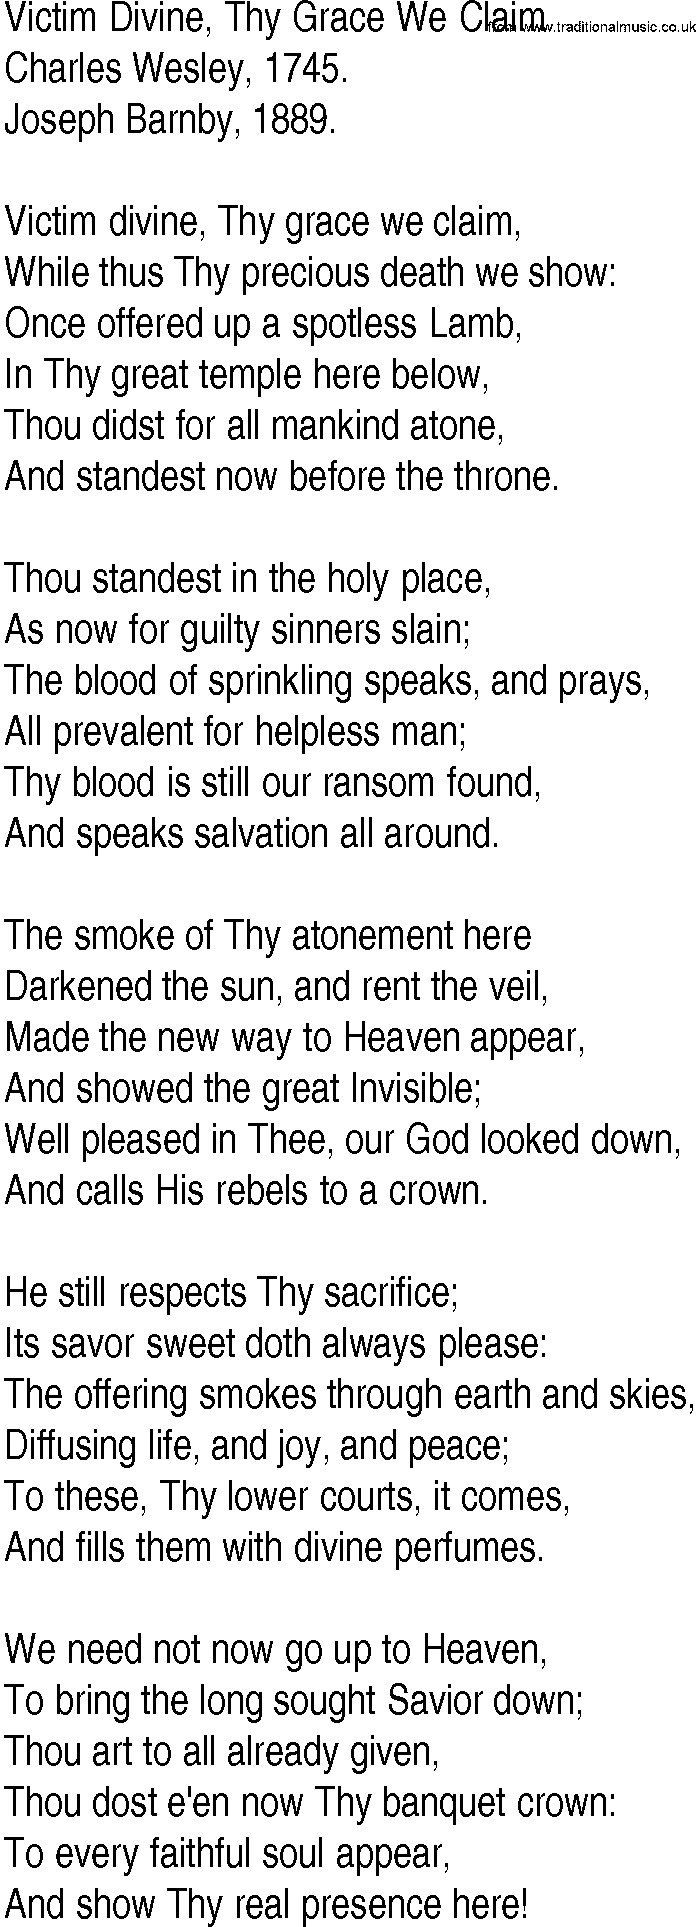 Hymn and Gospel Song: Victim Divine, Thy Grace We Claim by Charles Wesley lyrics